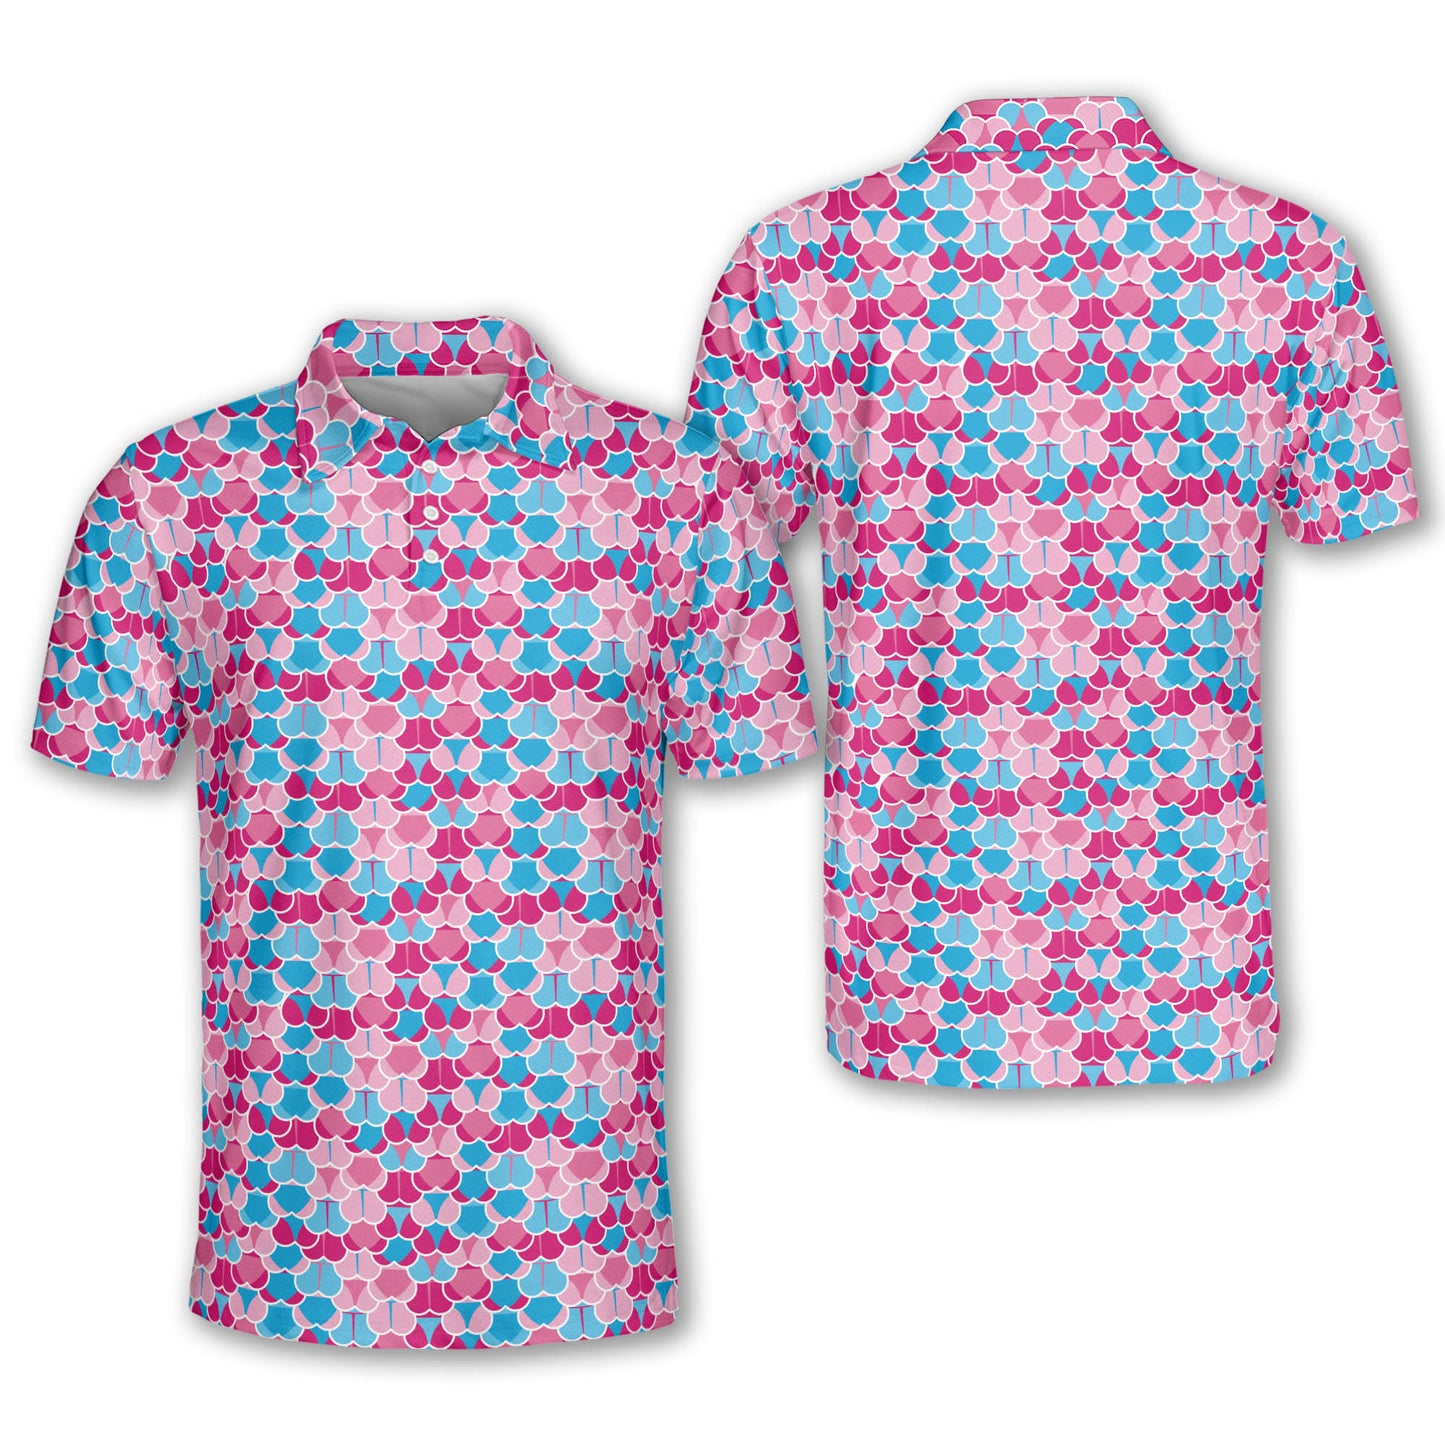 Whale Tail Golf Shirts, Mens Funny Golf Shirts, Whale Tail Polo Shirts, 80S Flashes Polo Shirts, Funny Hawaiian Beach Golf Polo Shirts AM0001